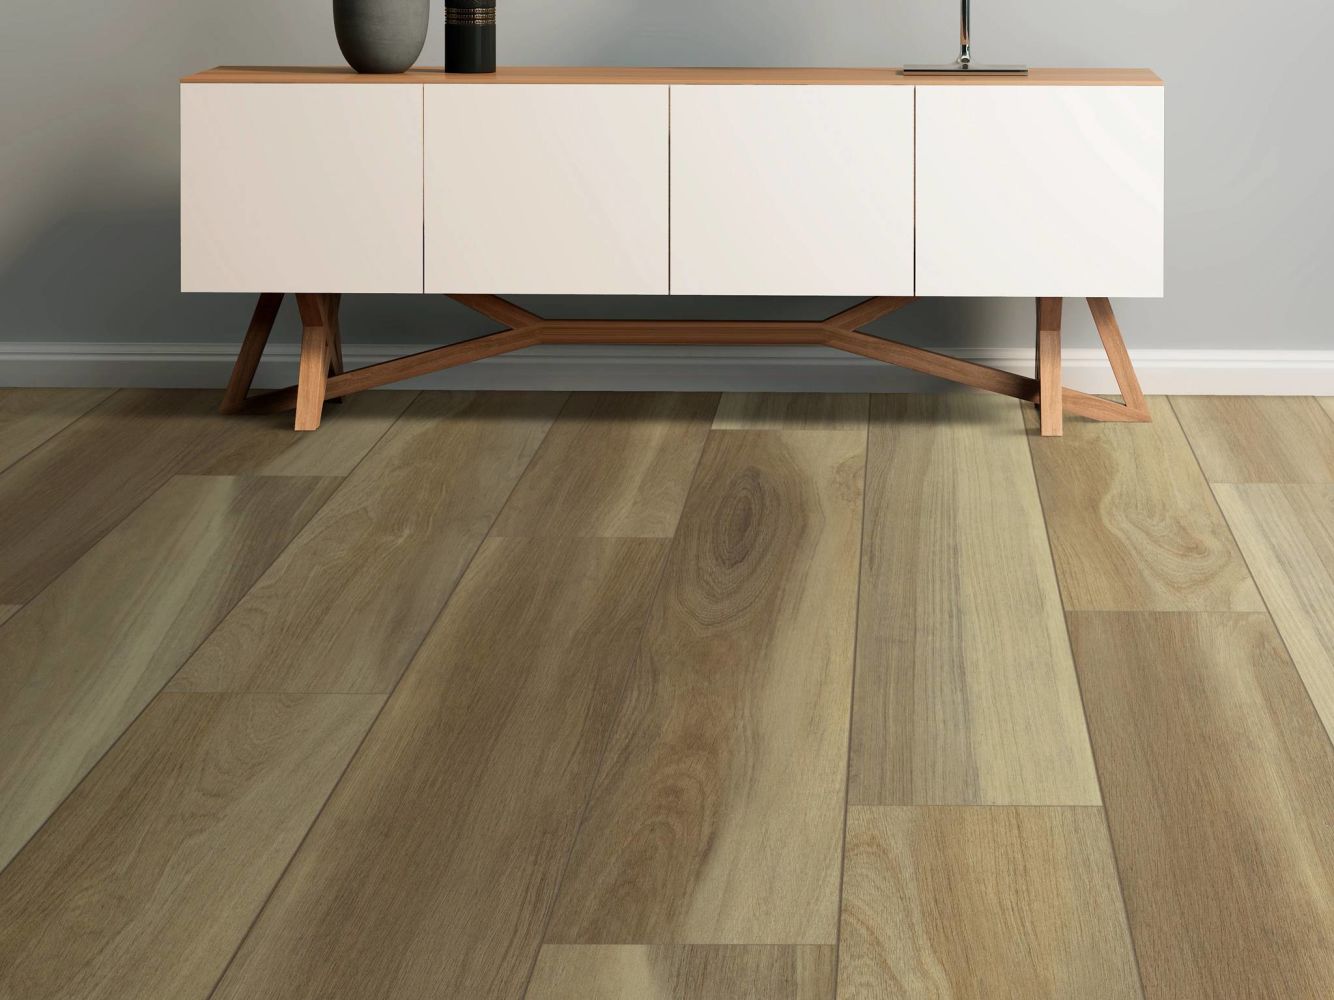 Shaw Floors Cp Colortile Rigid Core Plank And Tile Chancel Oak Clk Shawshank Oak 00168_CV171